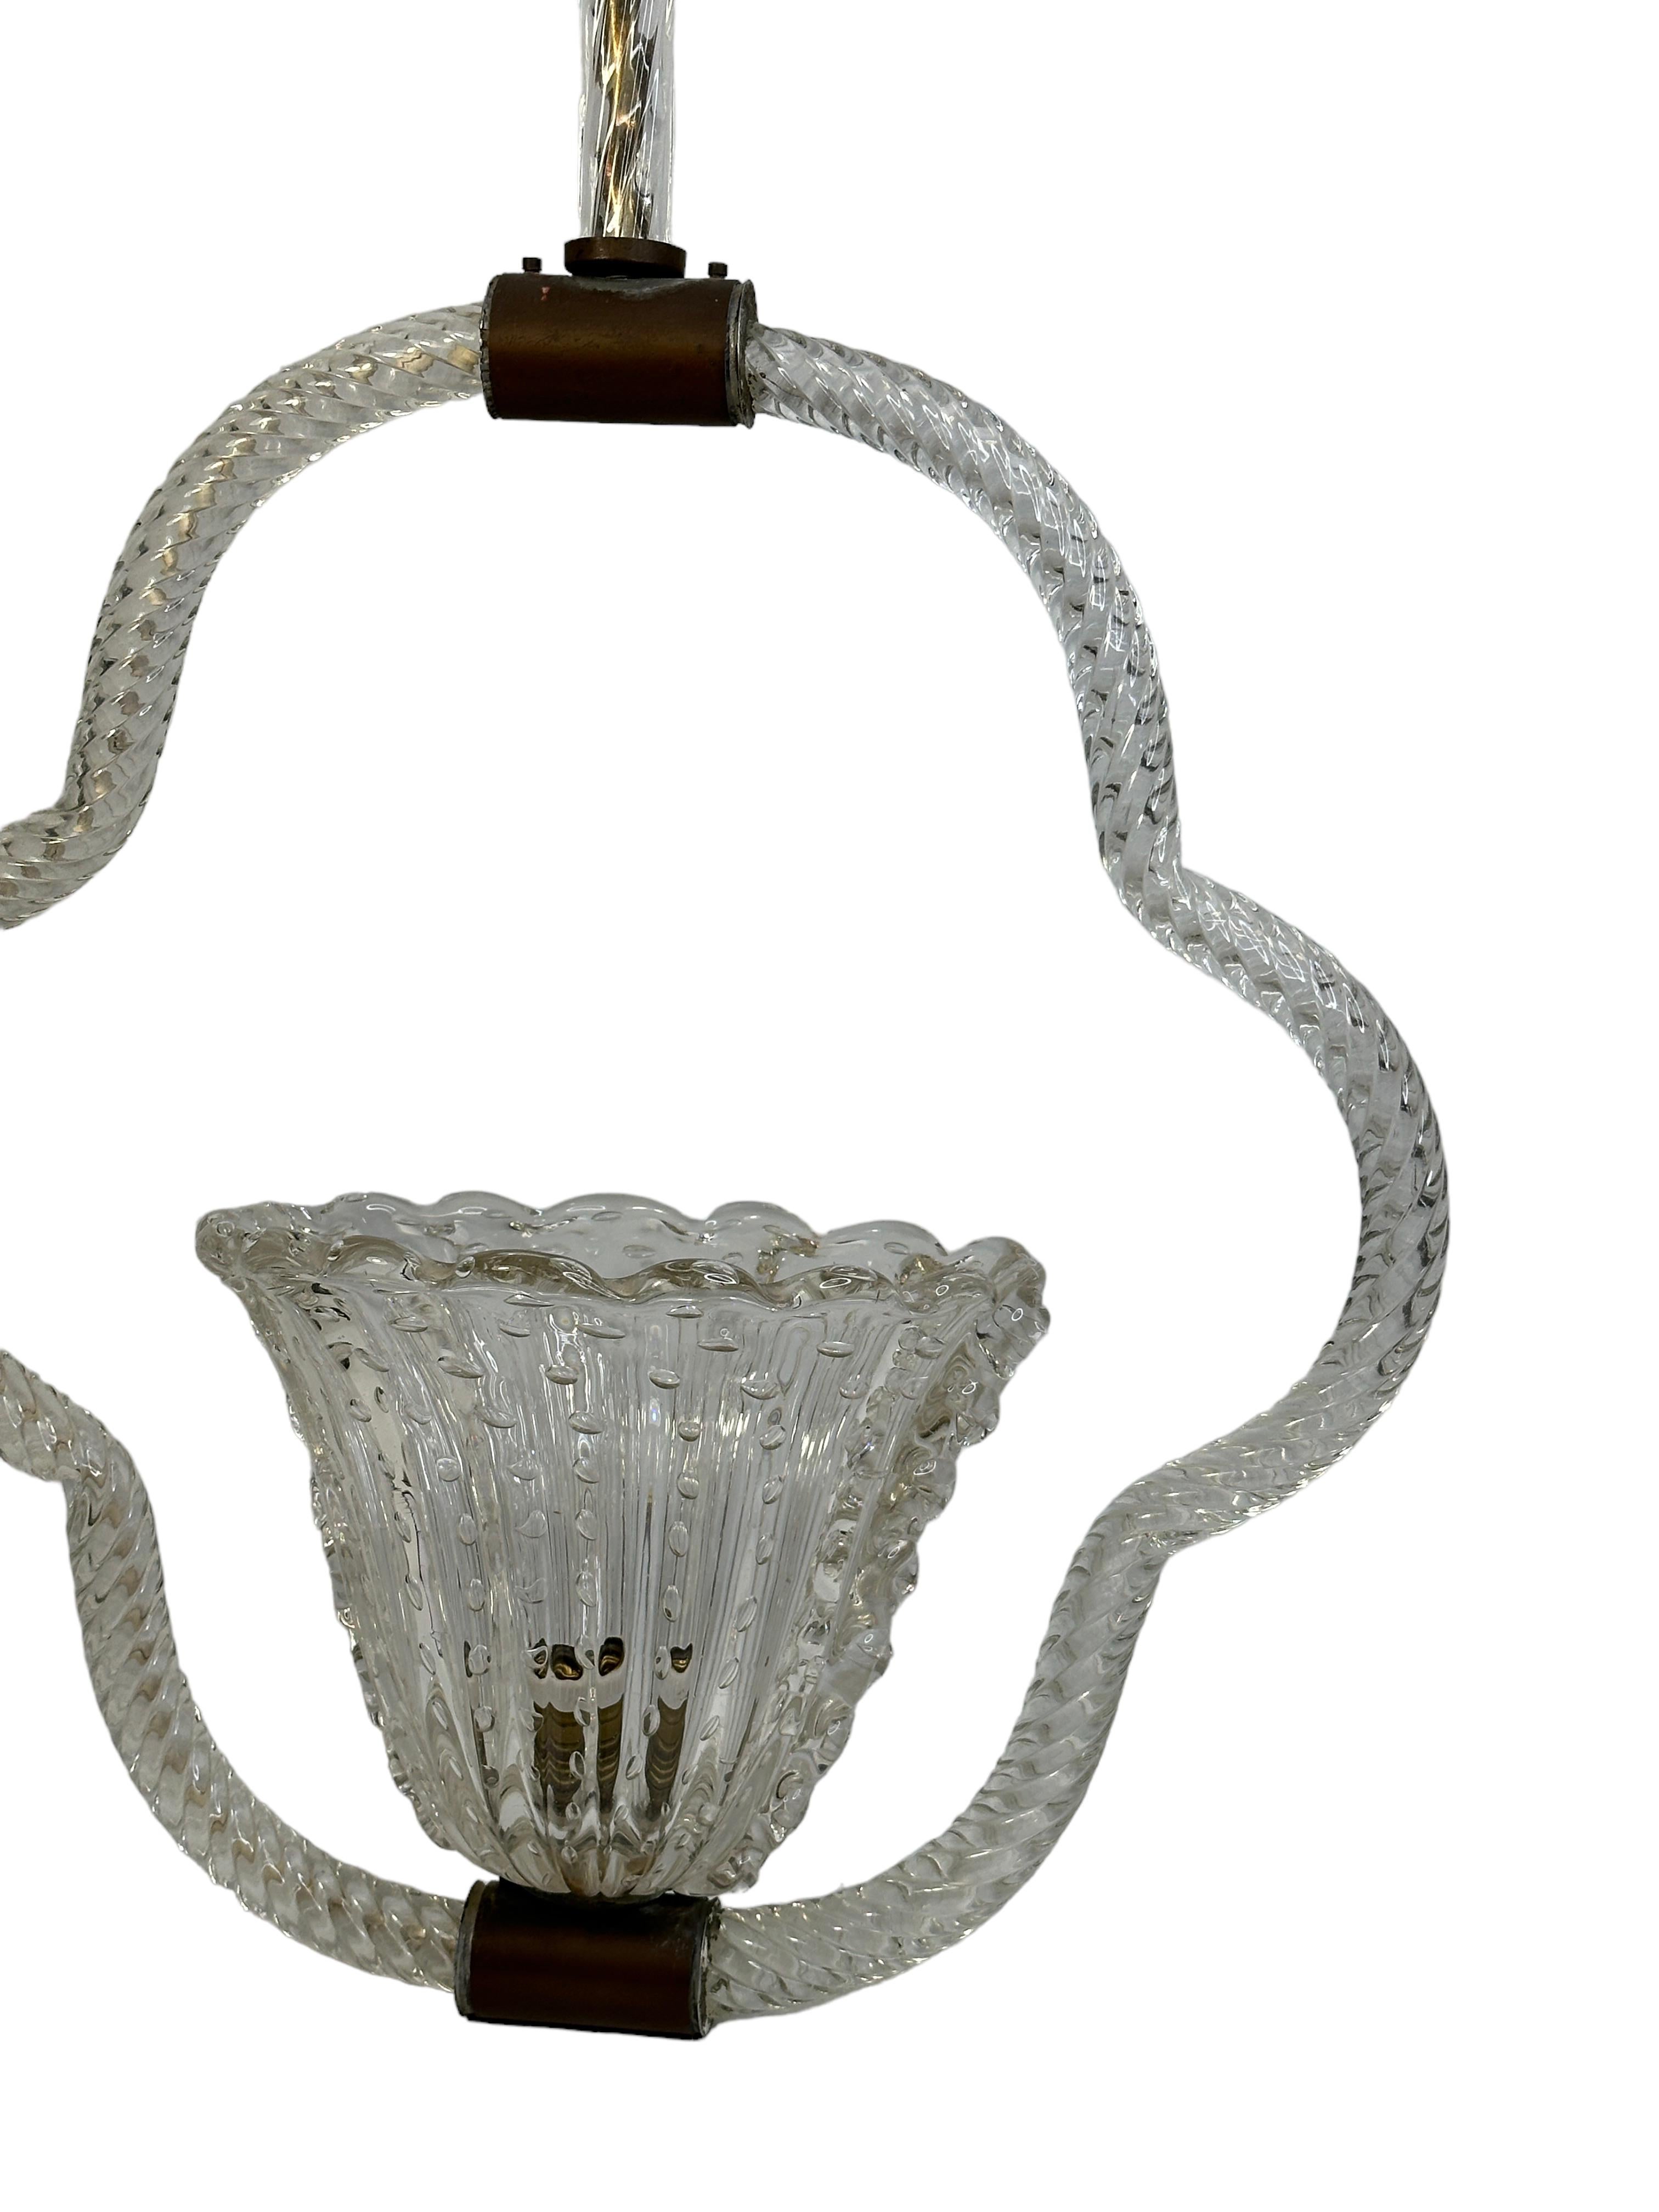 Italian Stunning Large Barovier Toso Pendant Light Chandelier Murano Glass Basket, 1930s For Sale